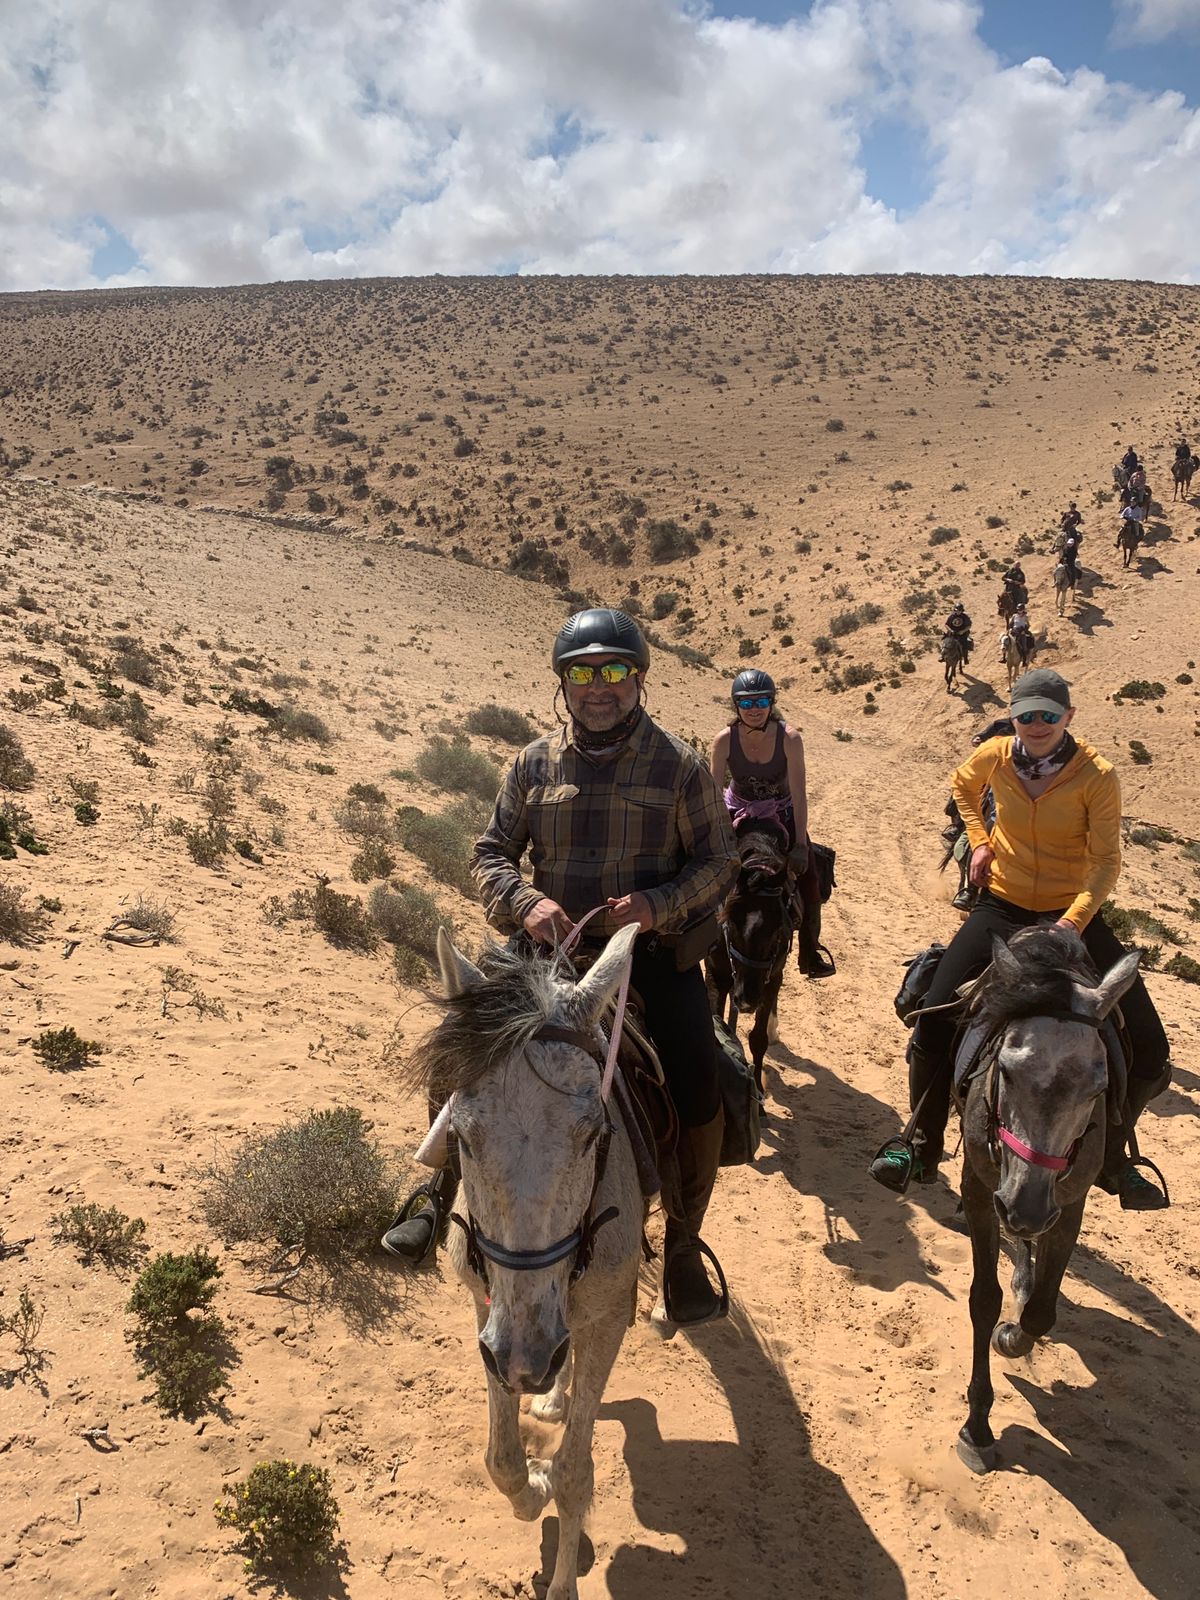 Horse Riding in Agadir: An Unforgettable Experience